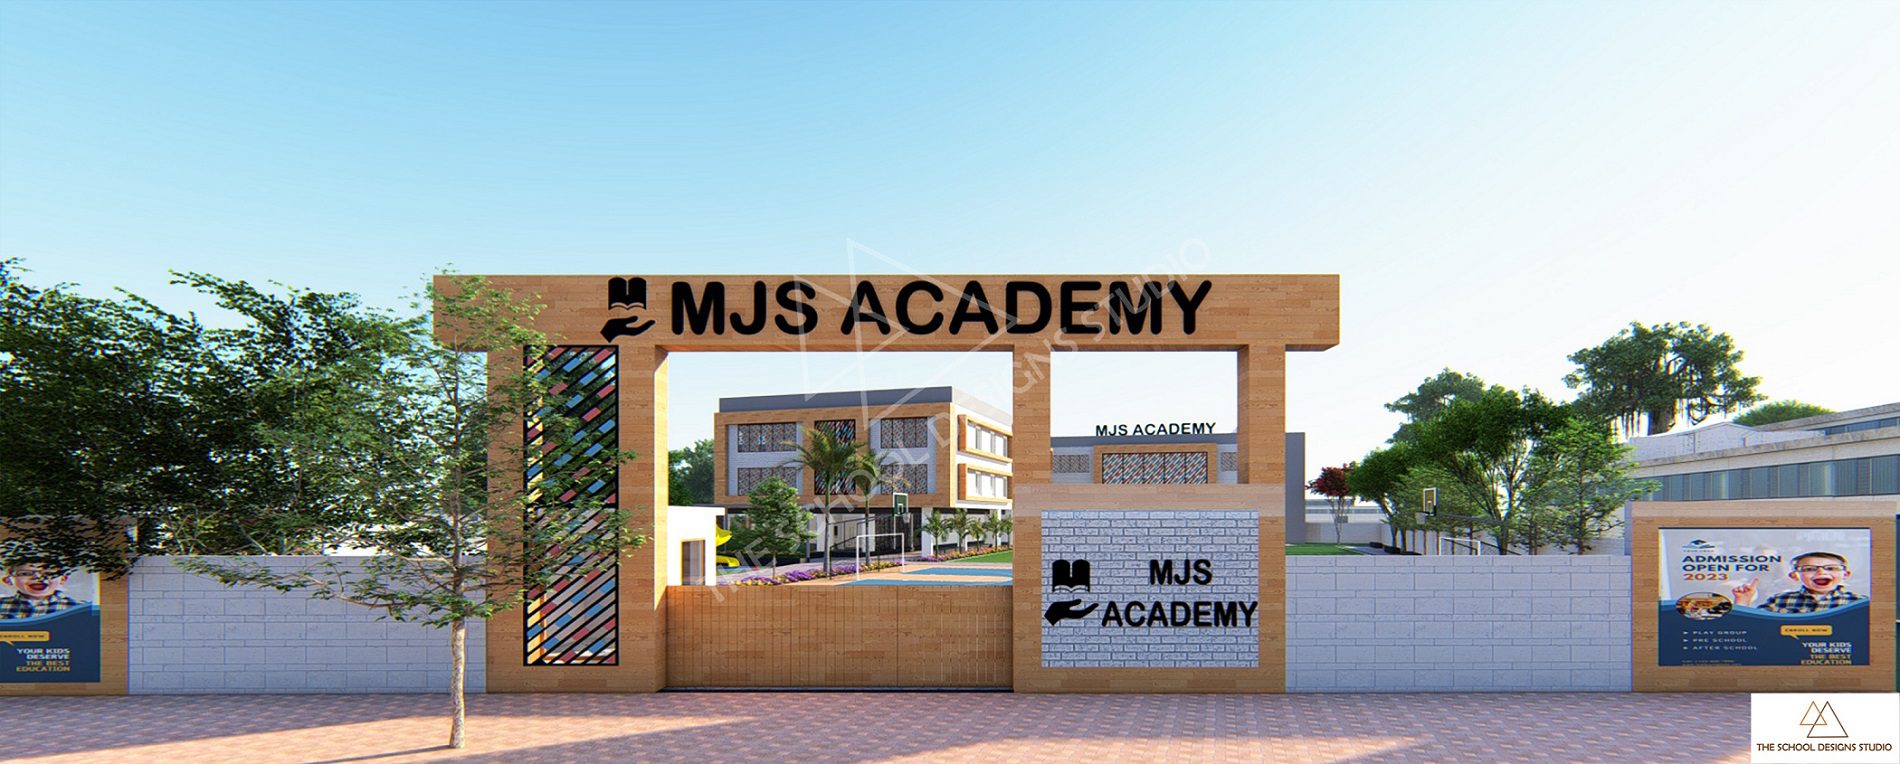 MJS Academy, Ayodhya, Uttar pradesh. Designed by The School Designs Studio